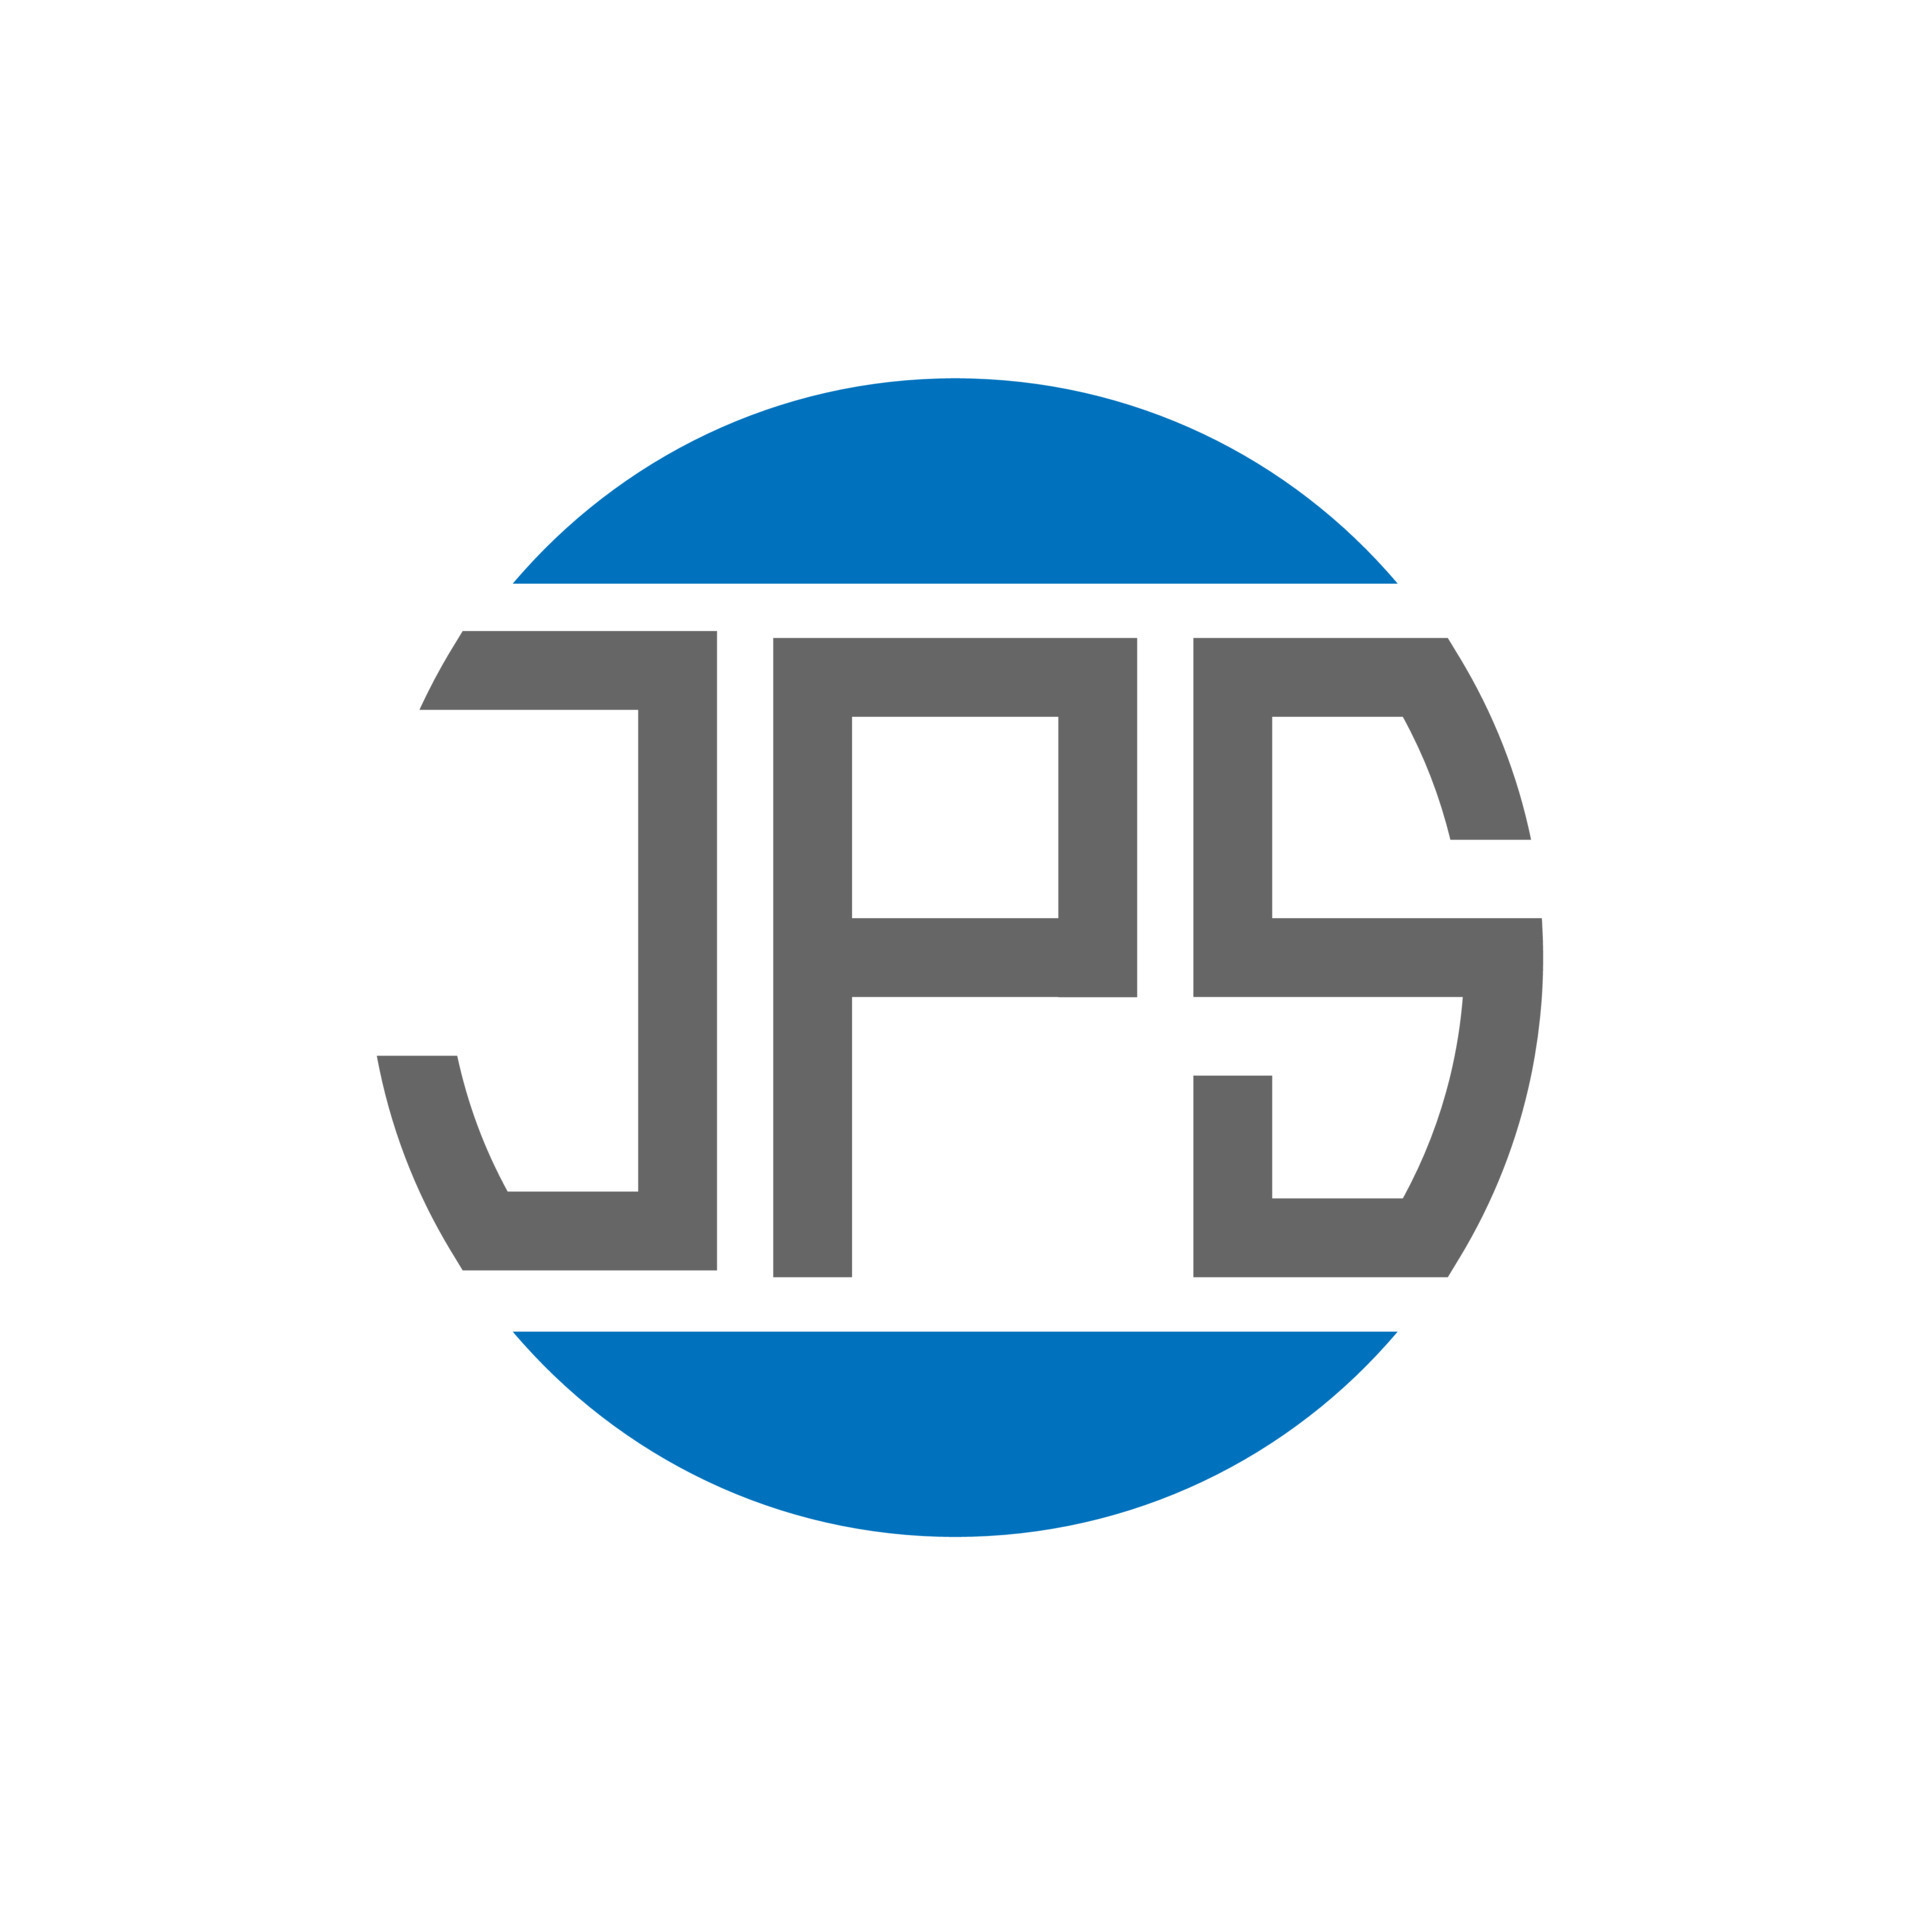 JPS John Player Special Shaped Logo Style Self Adhesive Car Badge. 2.25